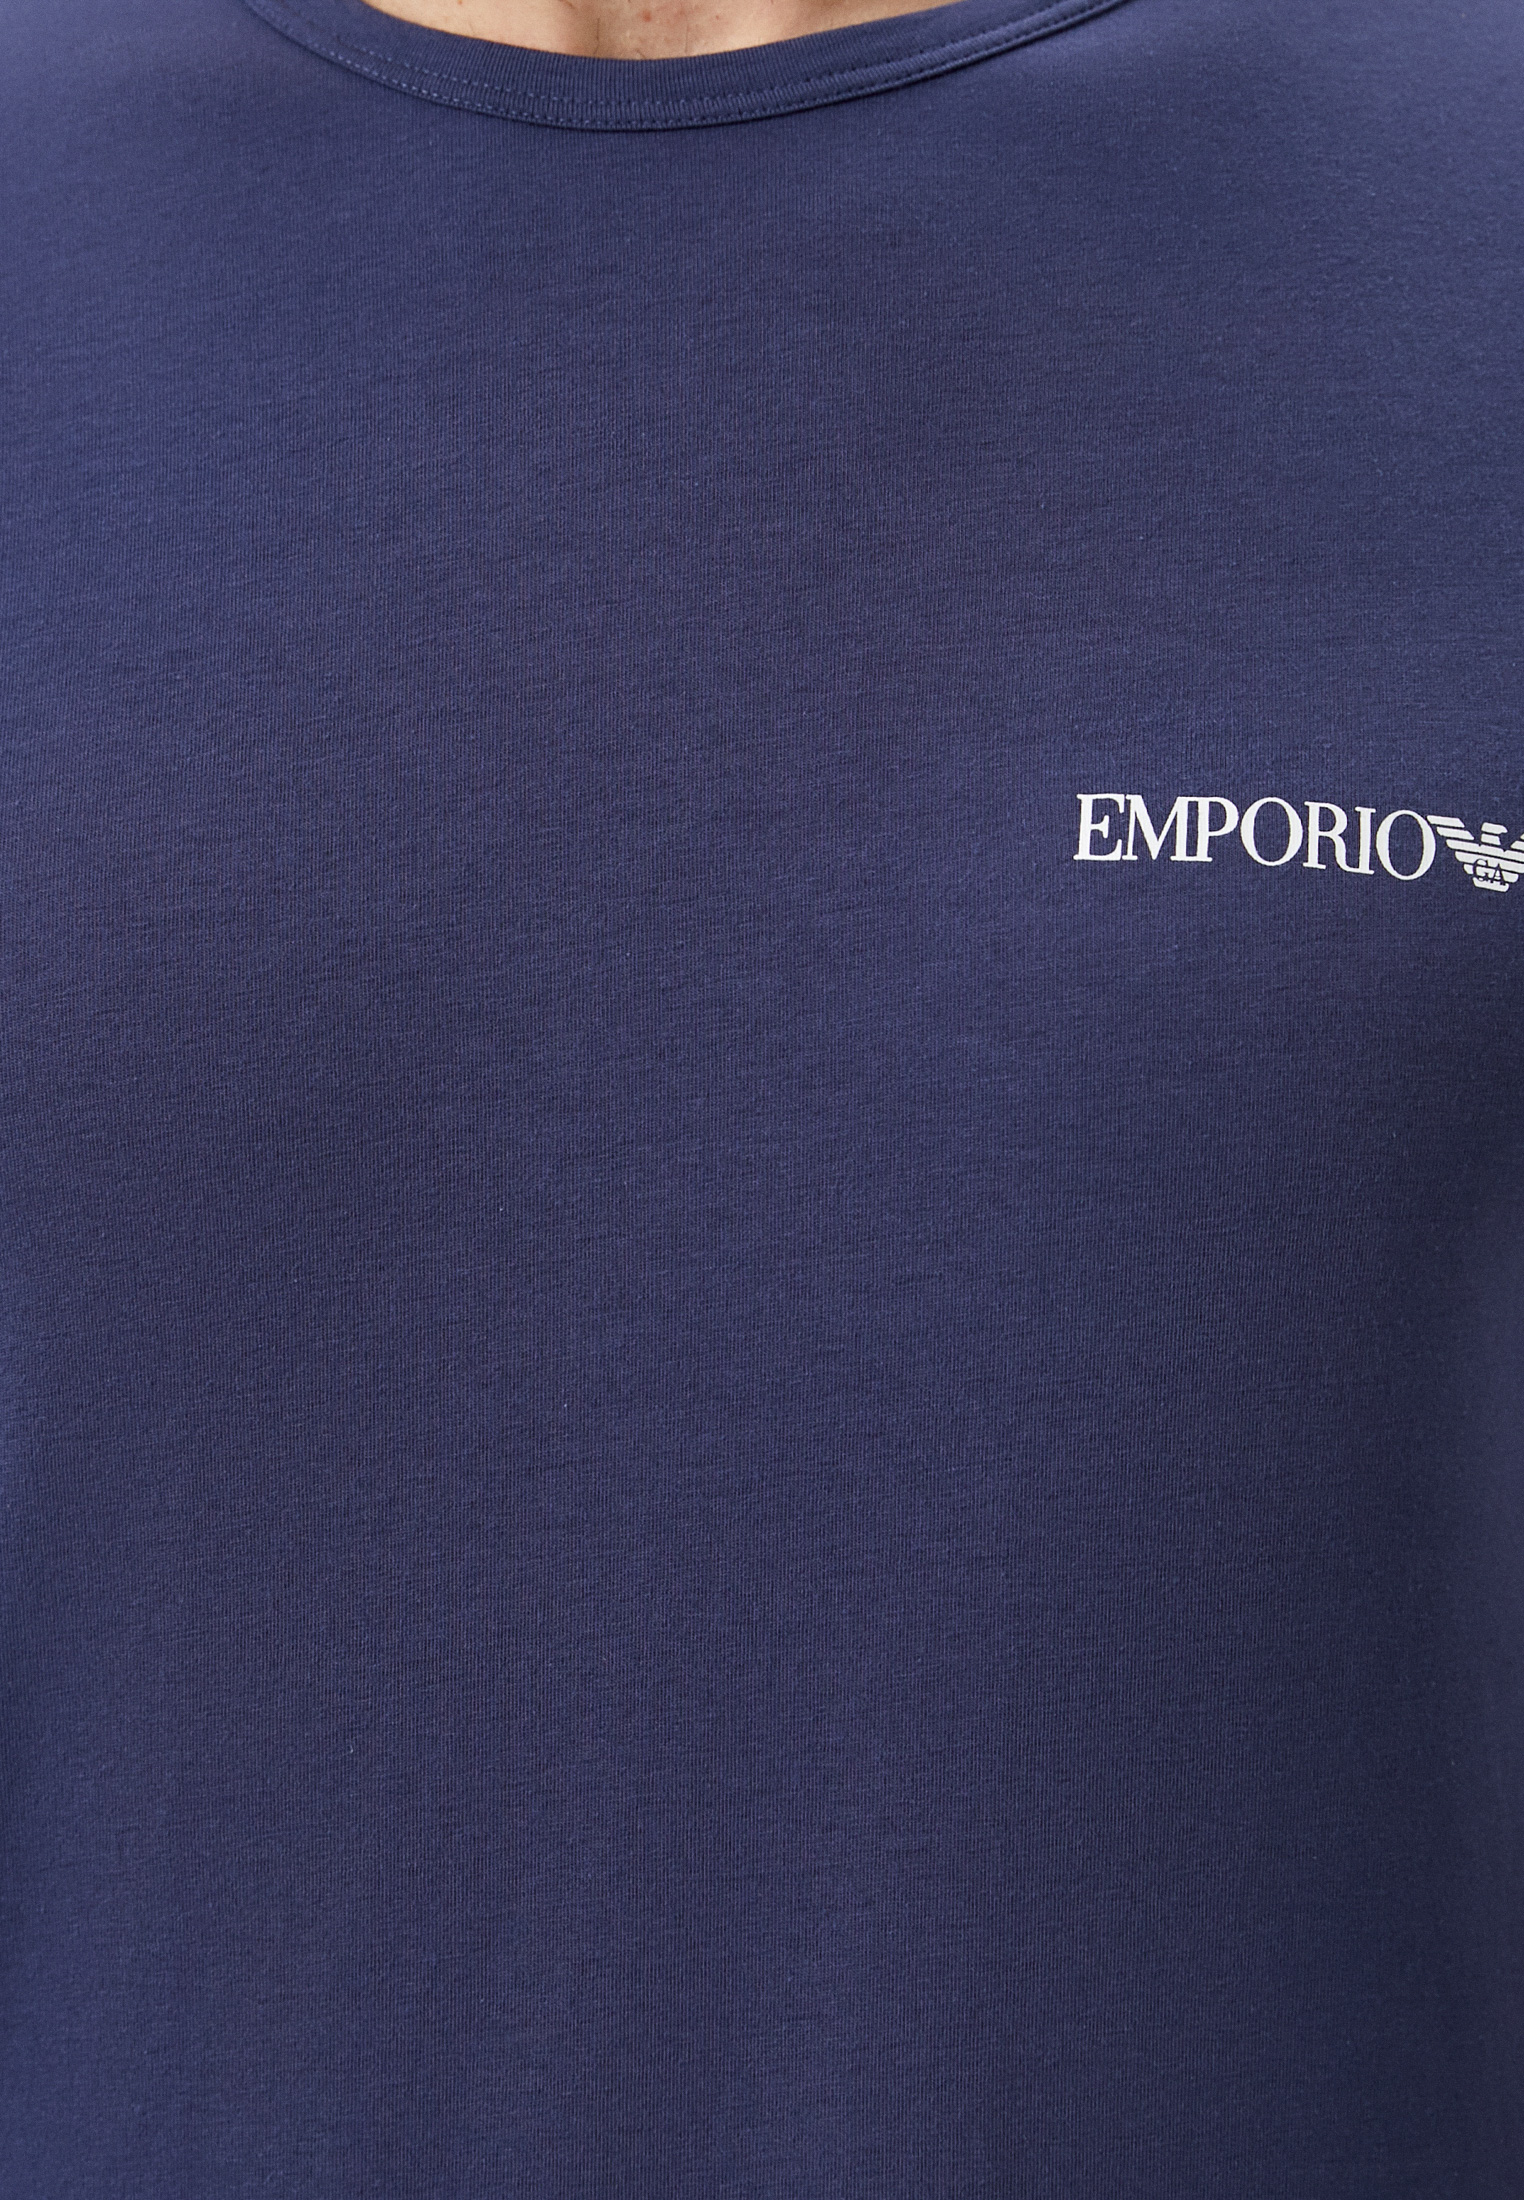 Мужская футболка Emporio Armani (Эмпорио Армани) 111267 3R717: изображение 4